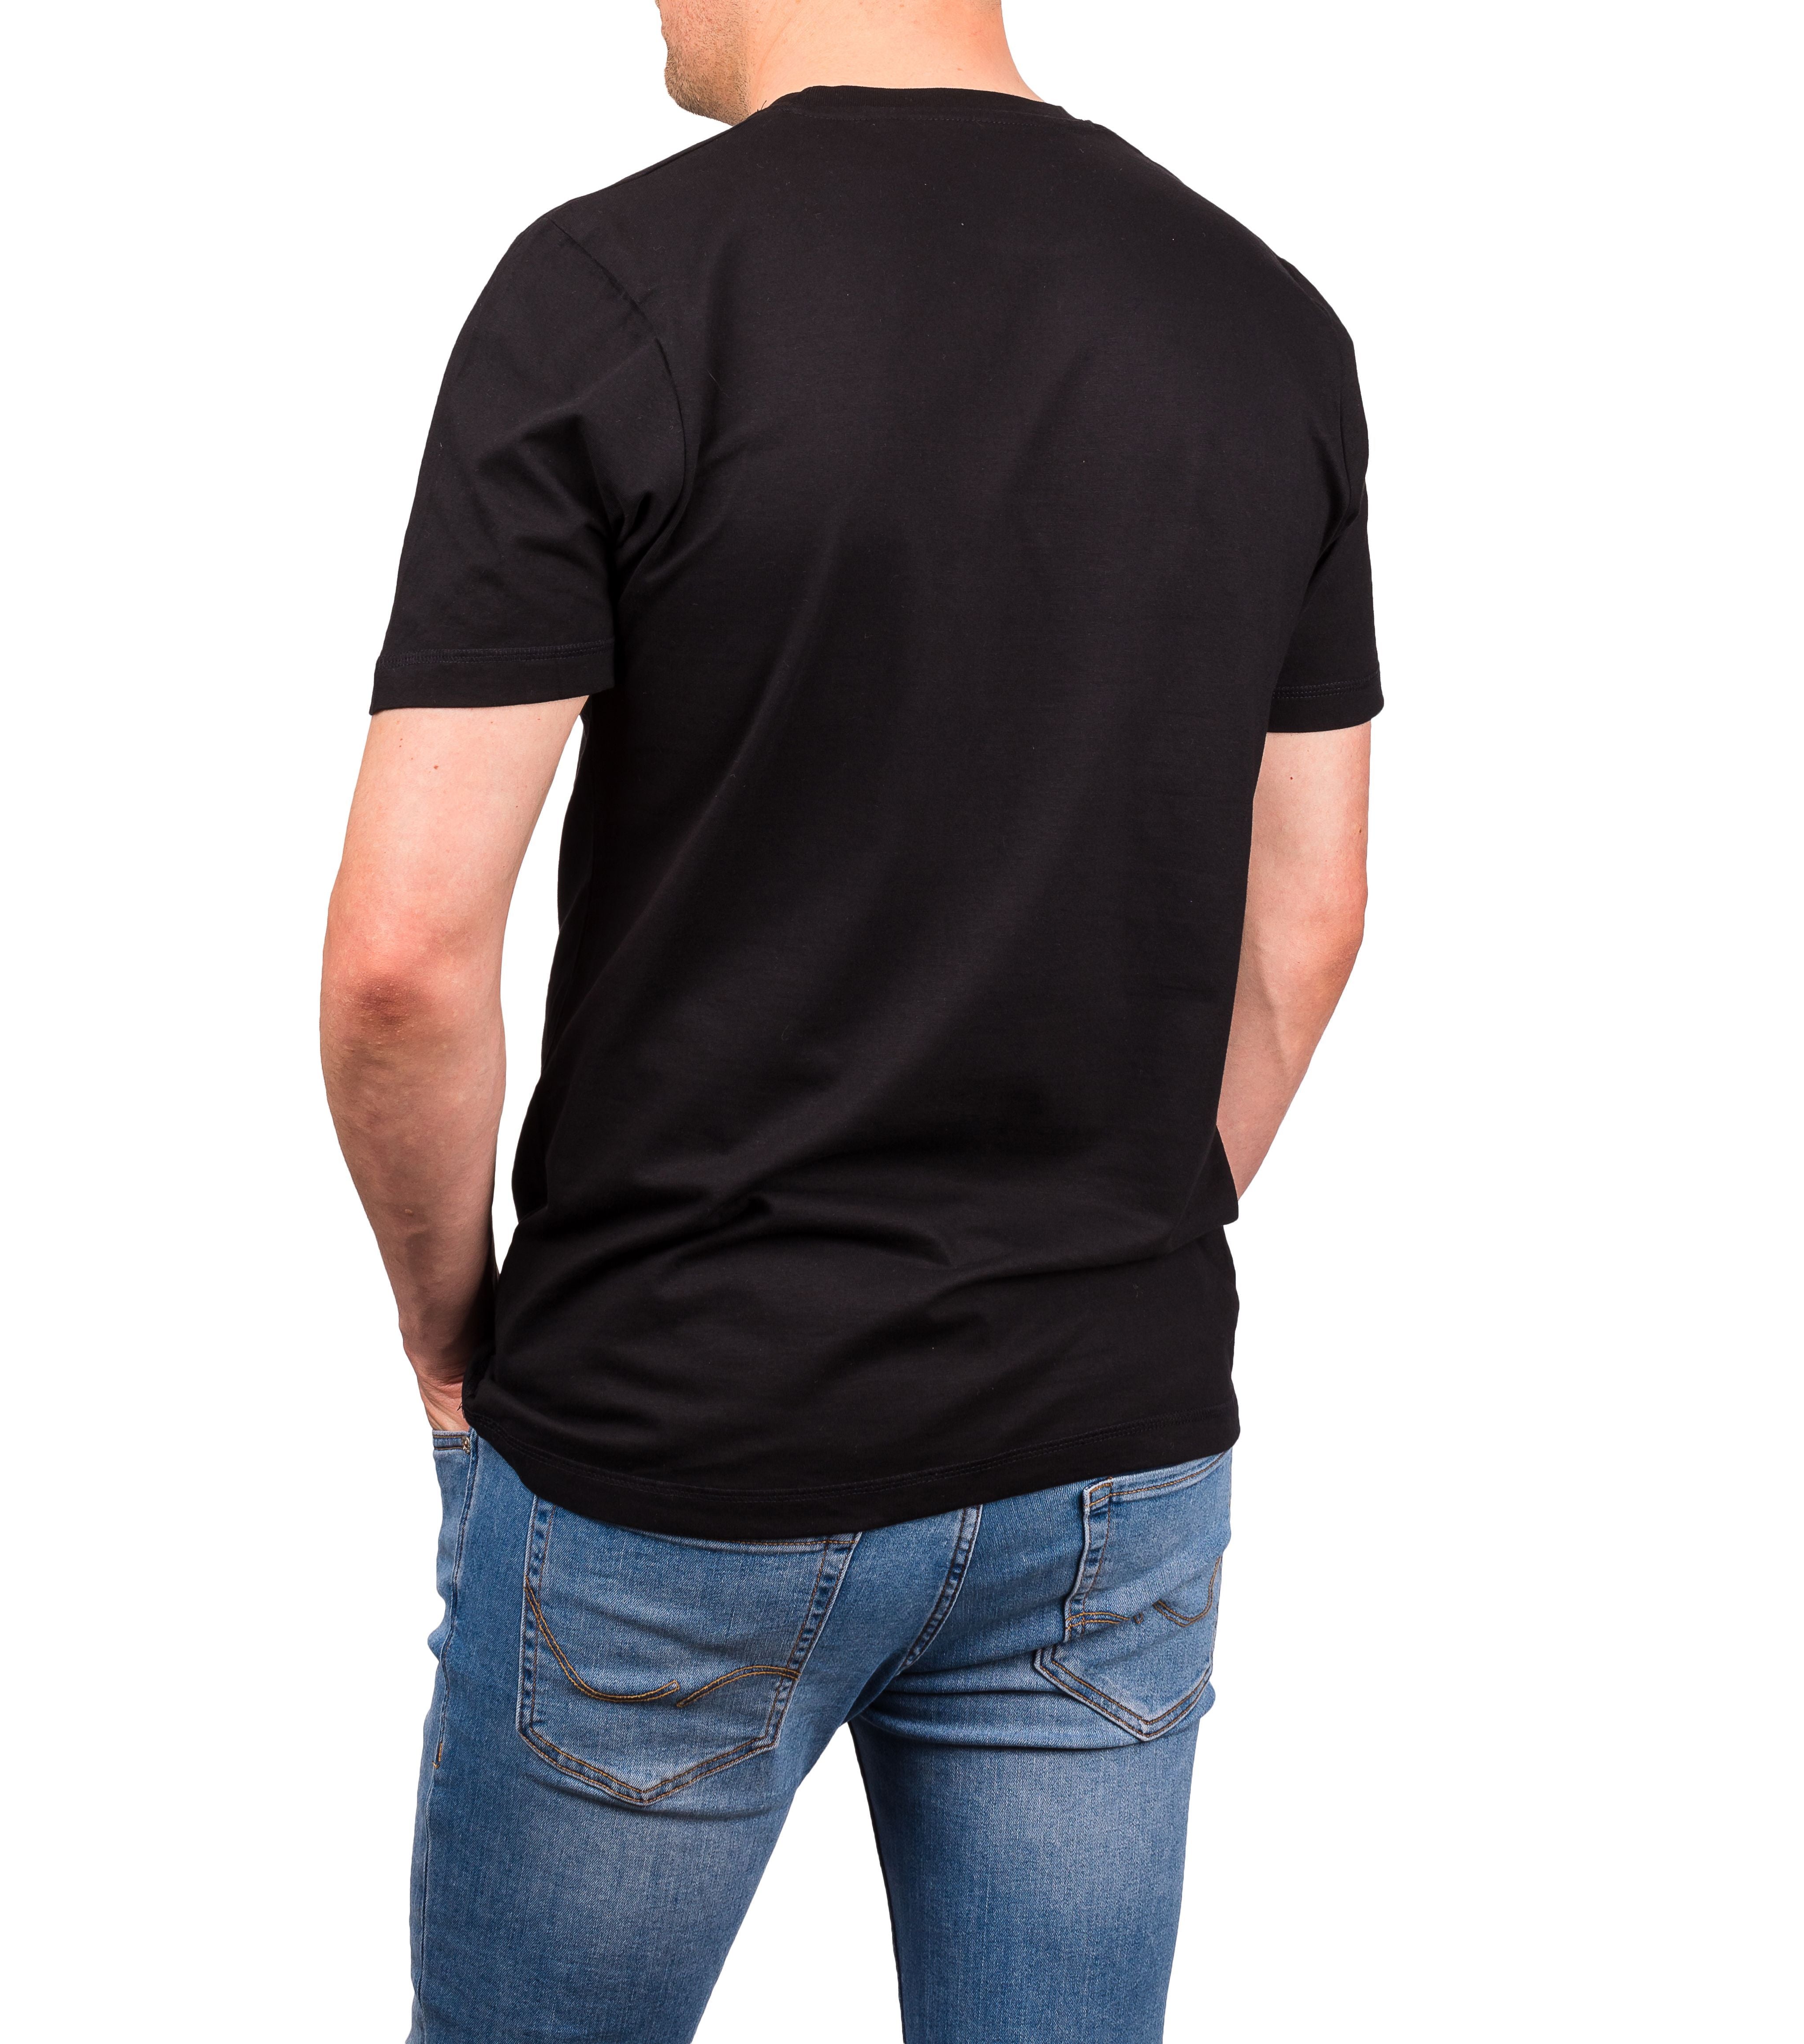 X-Gamer Fueled T-Shirt (Black)